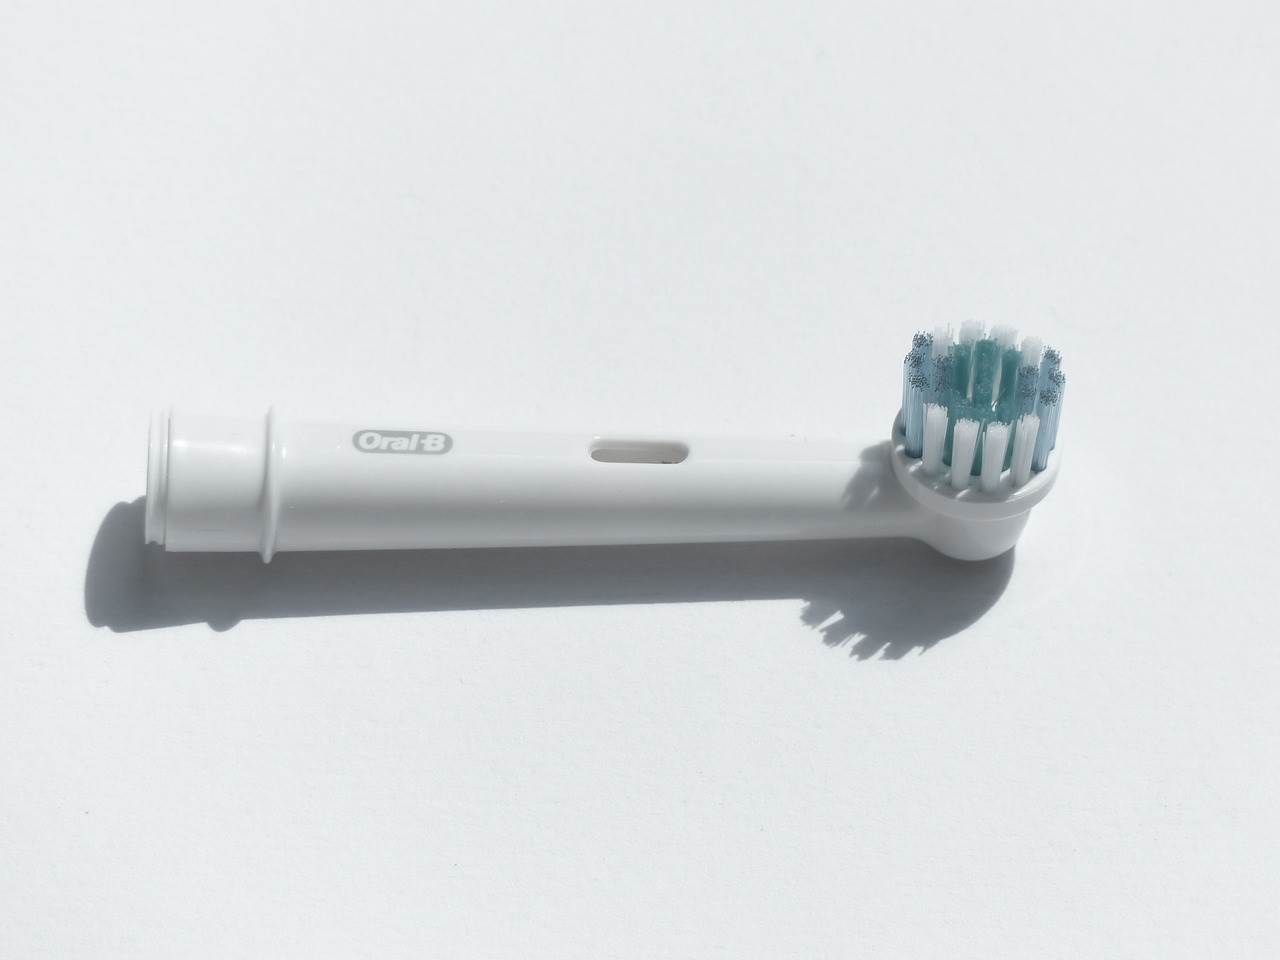 Toothbrush head